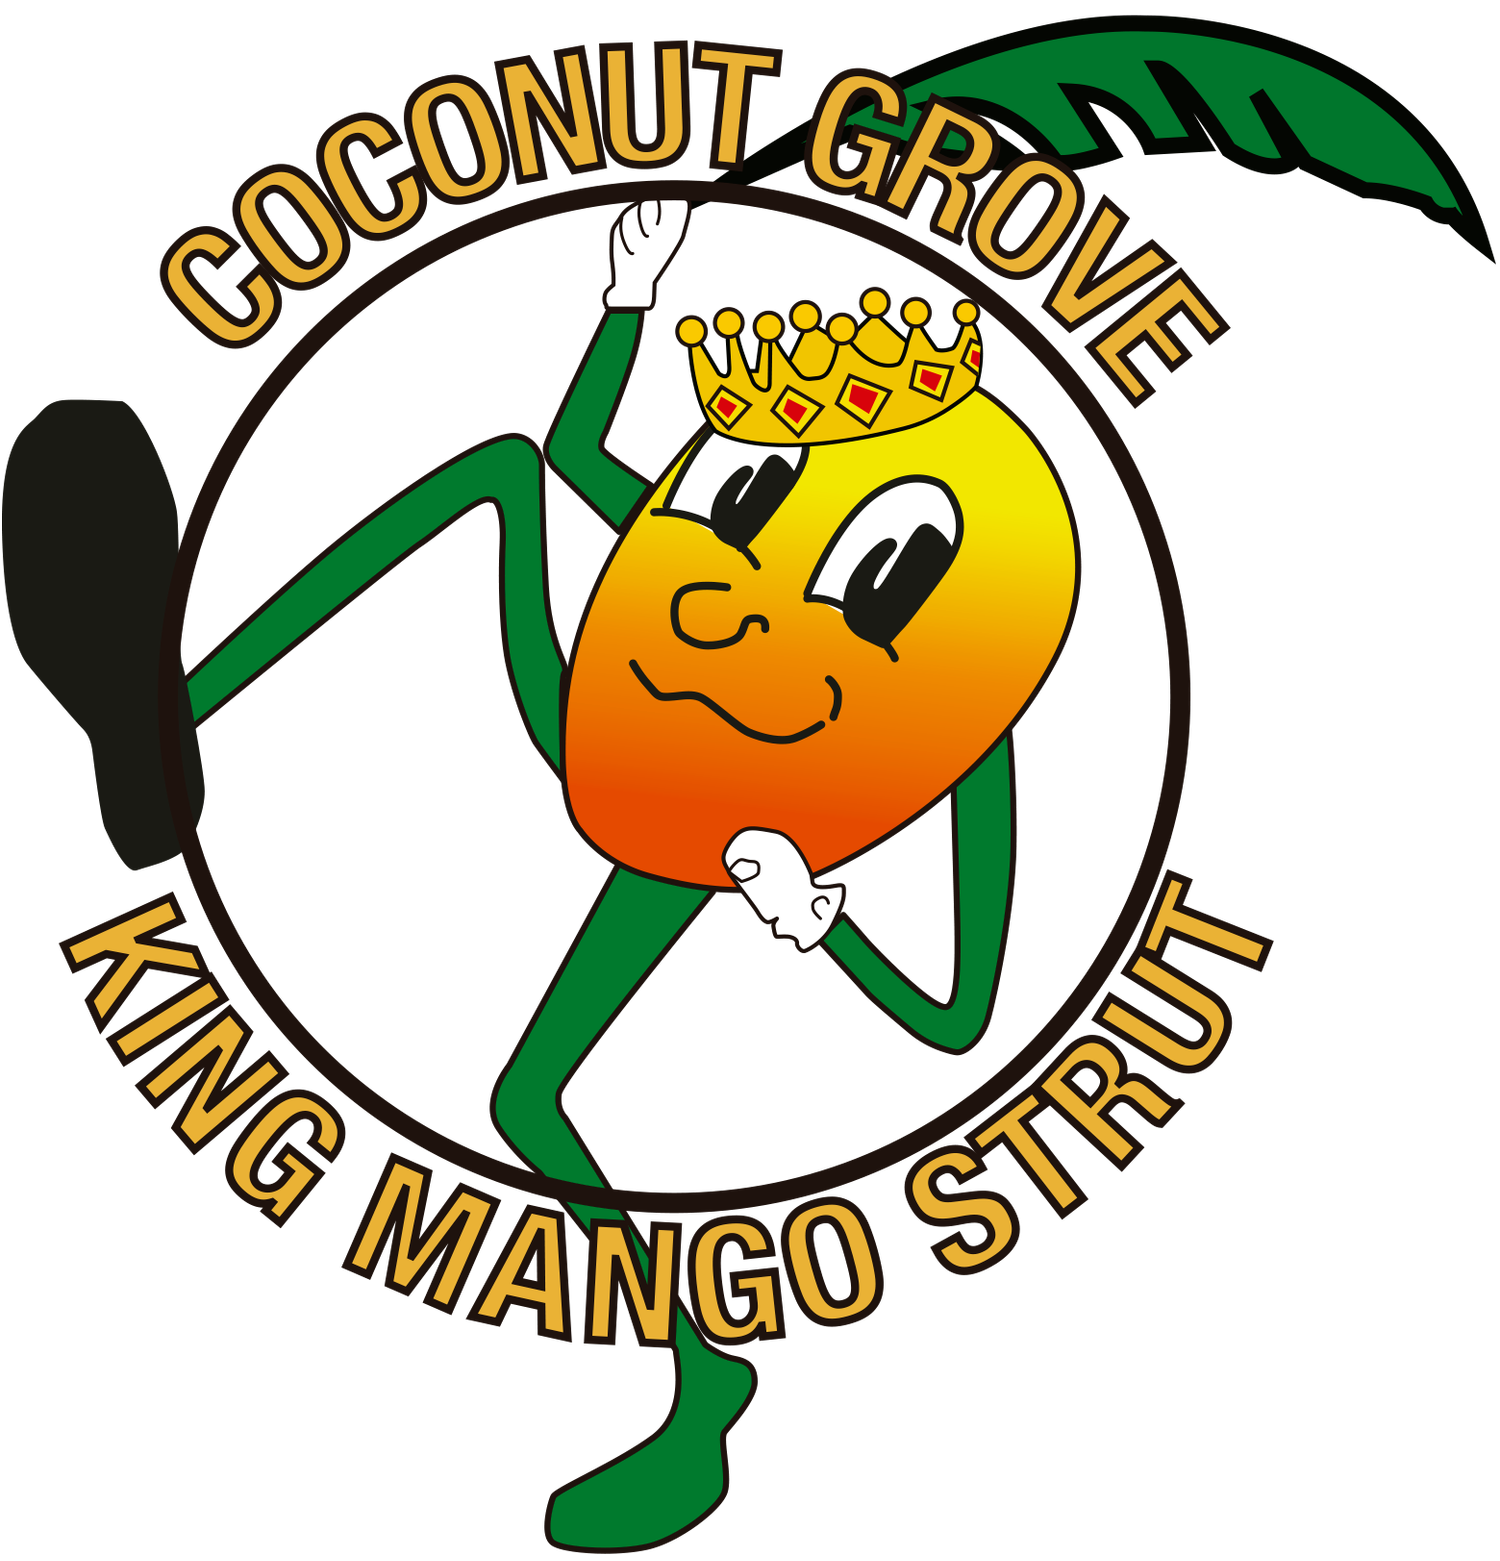 The King Mango Strut